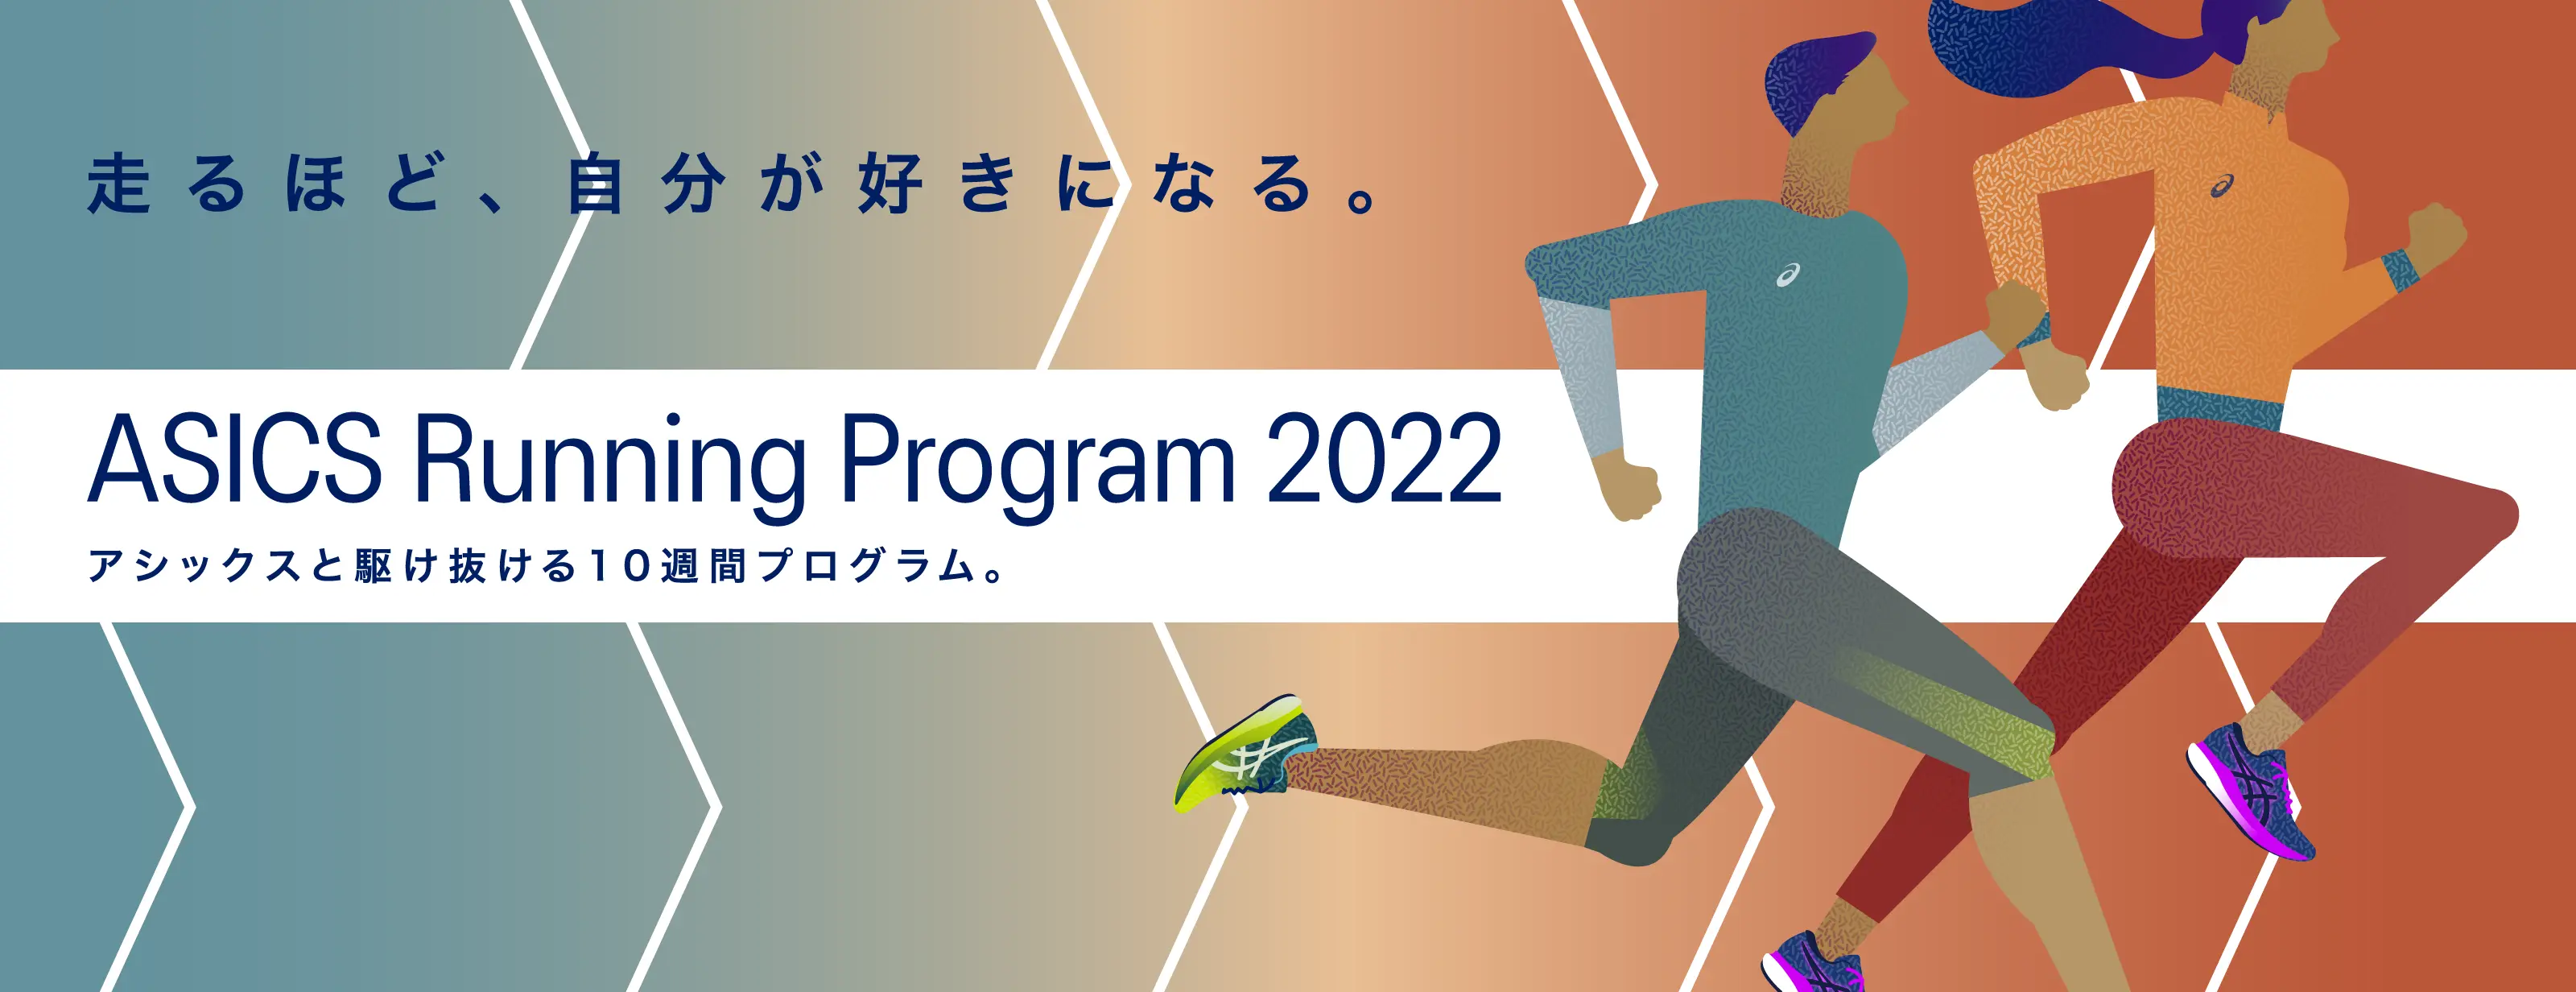 ASICS Running Program 2022